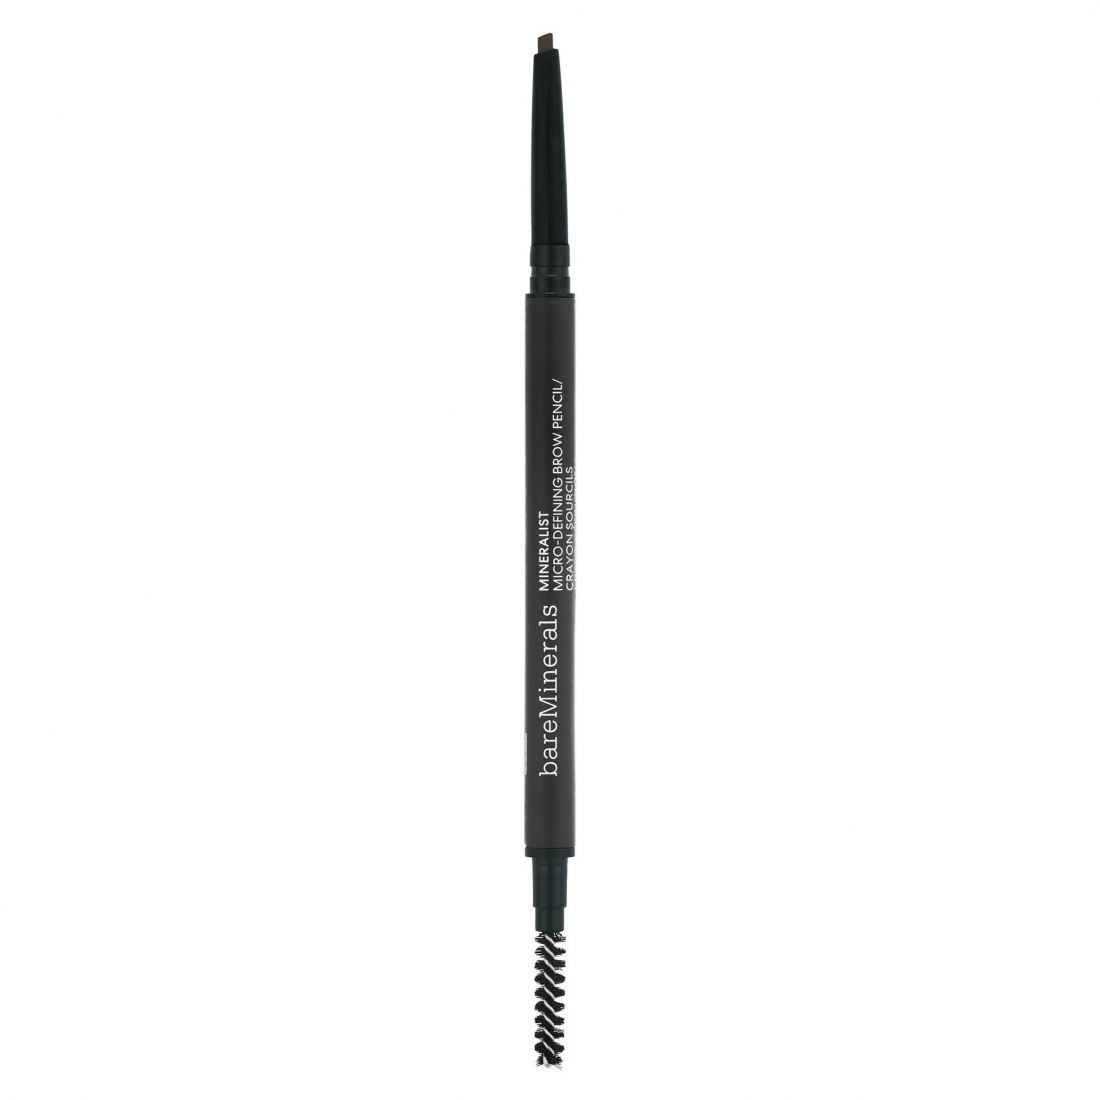 'Mineralist Micro-Defining' Eyebrow Pencil - Rich Black